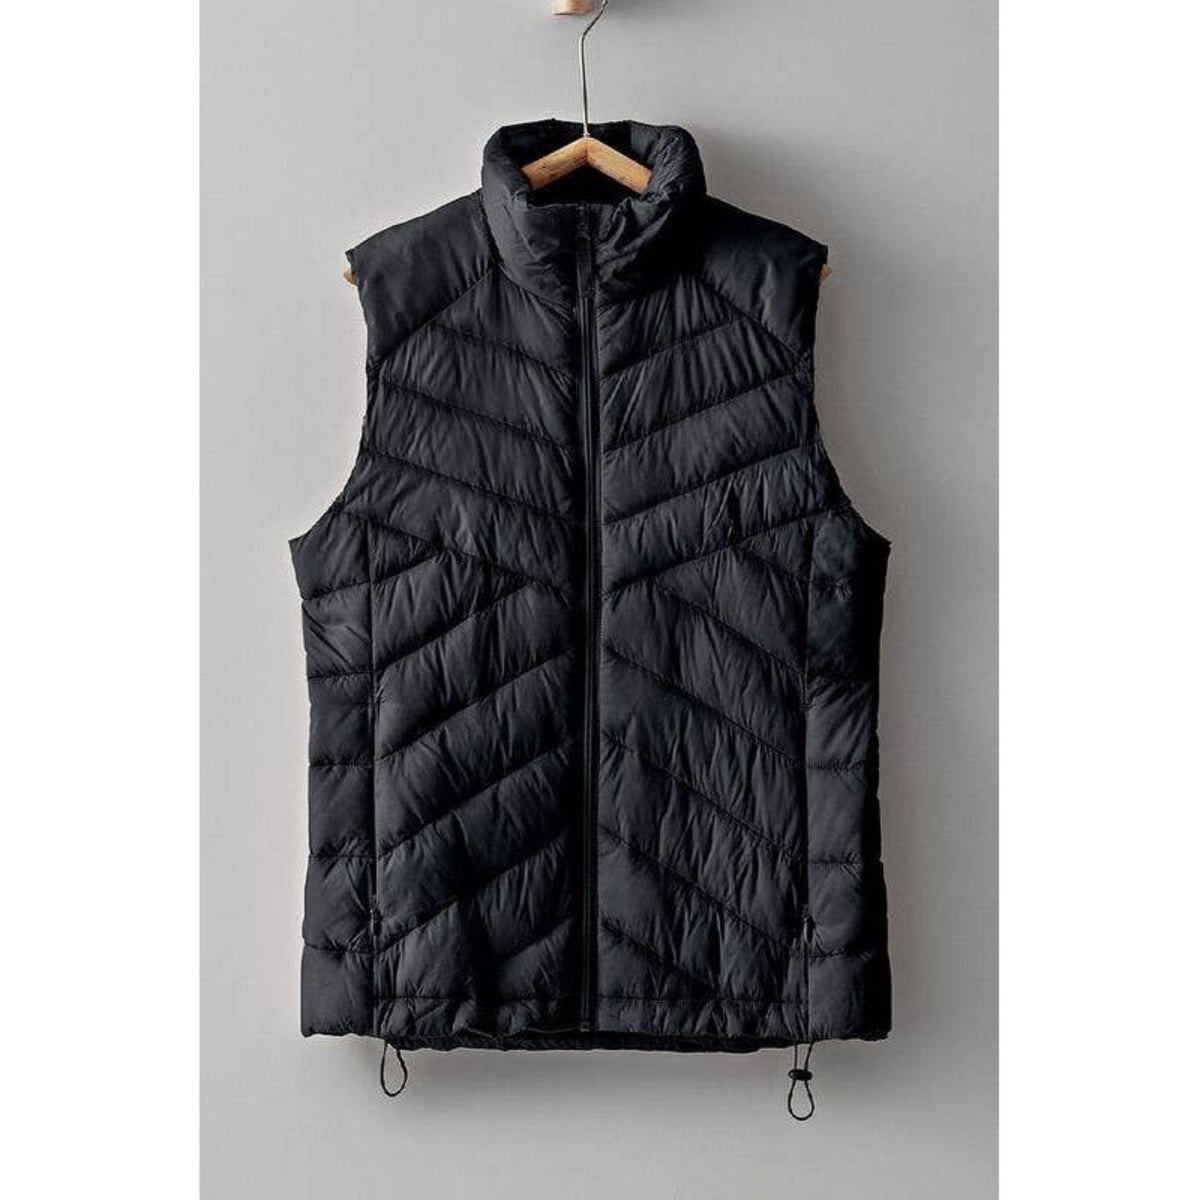 High neck zip up puffer vest (black); women's apparel